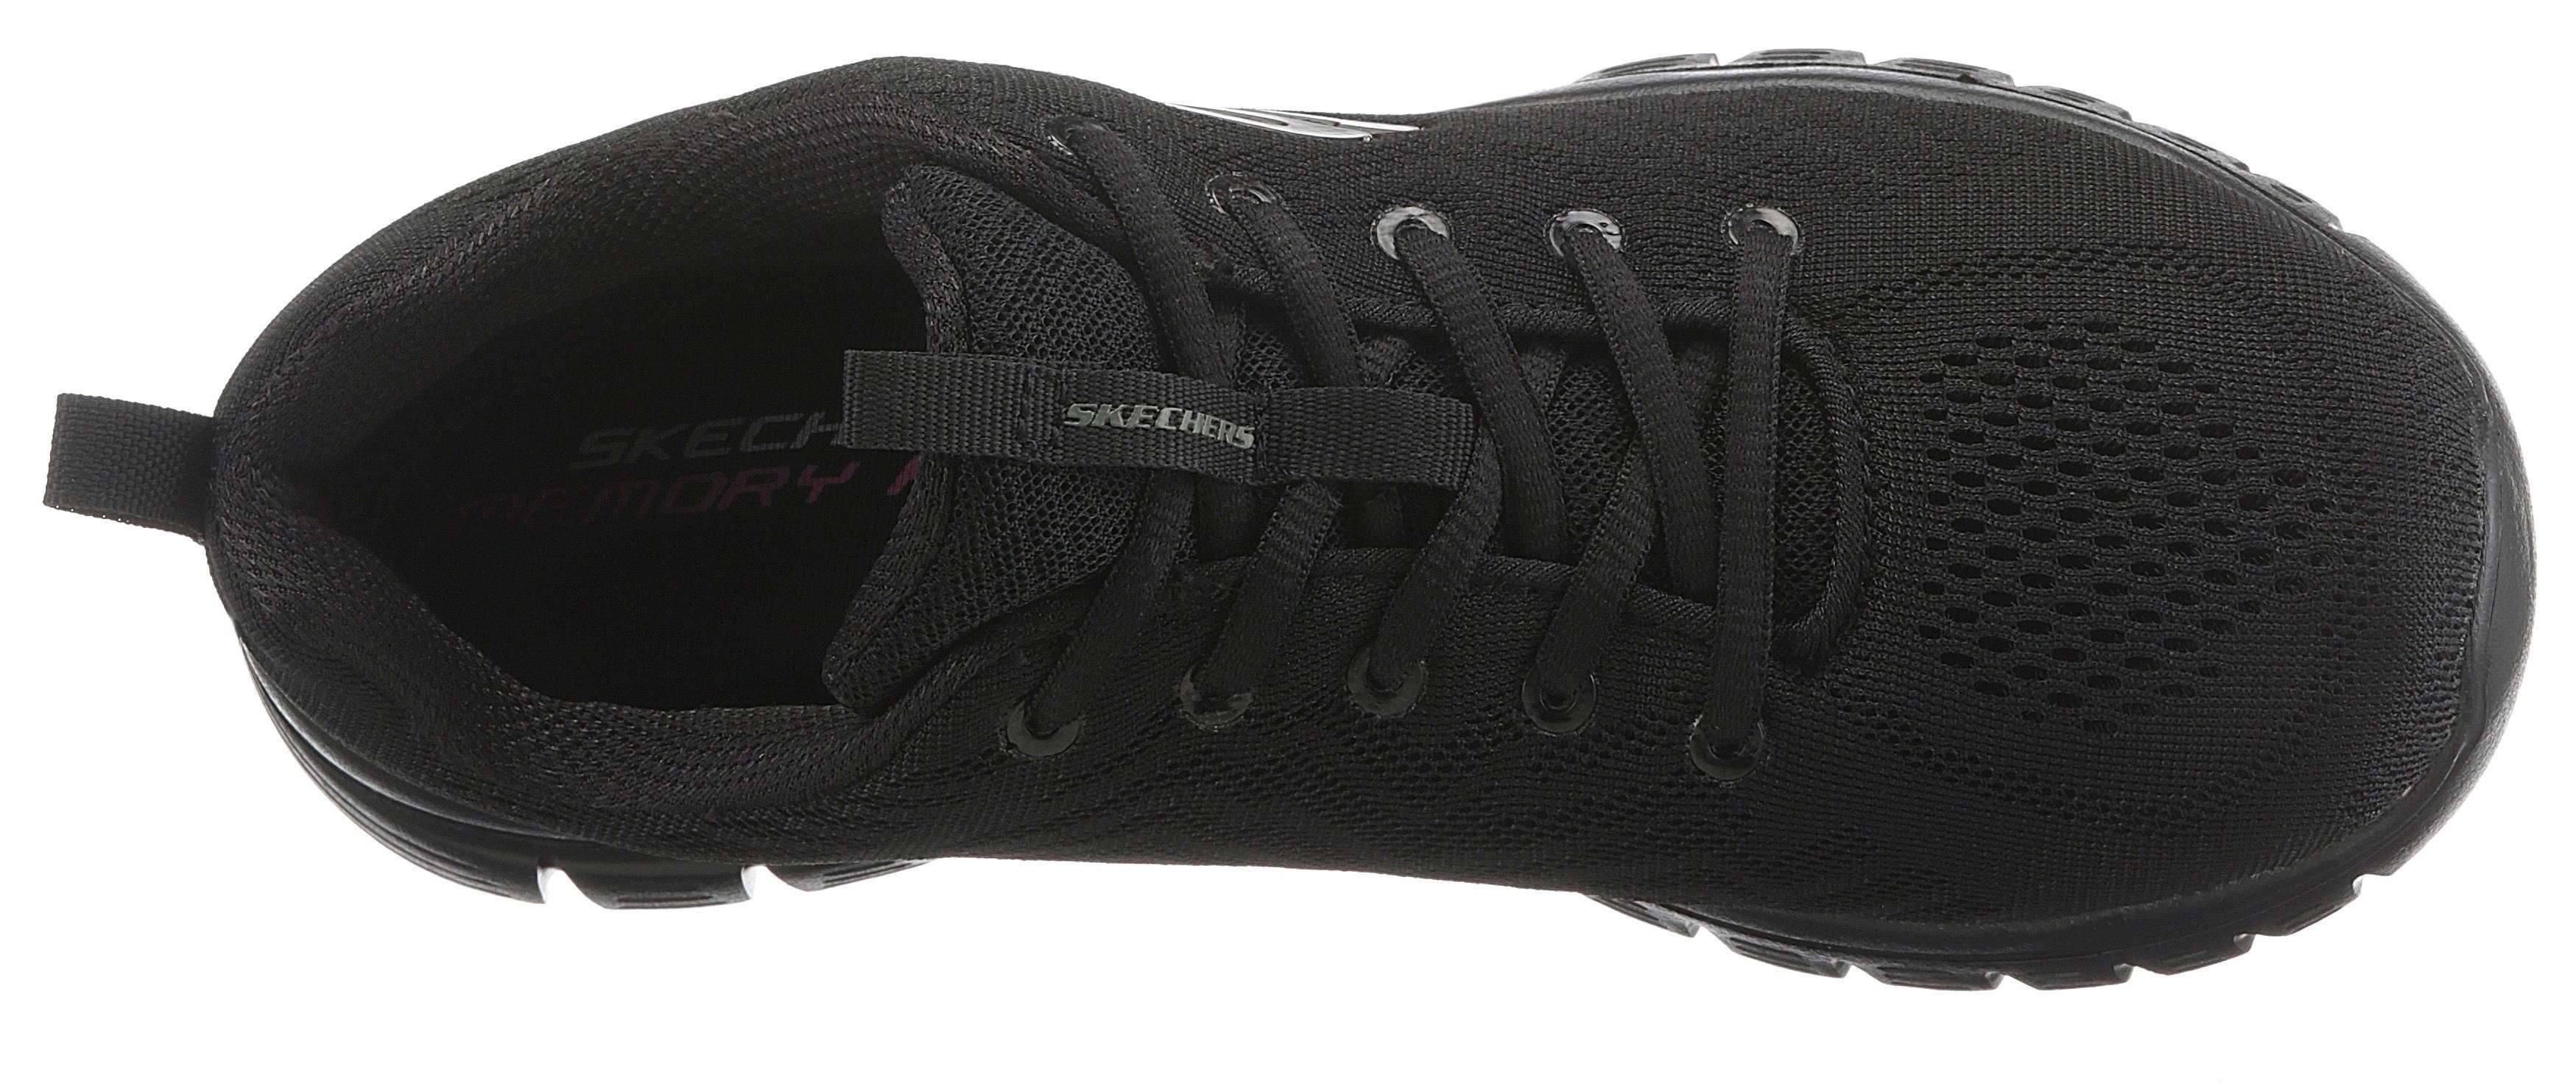 Skechers Graceful - Get Dämpfung mit durch schwarz Sneaker Connected Memory Foam